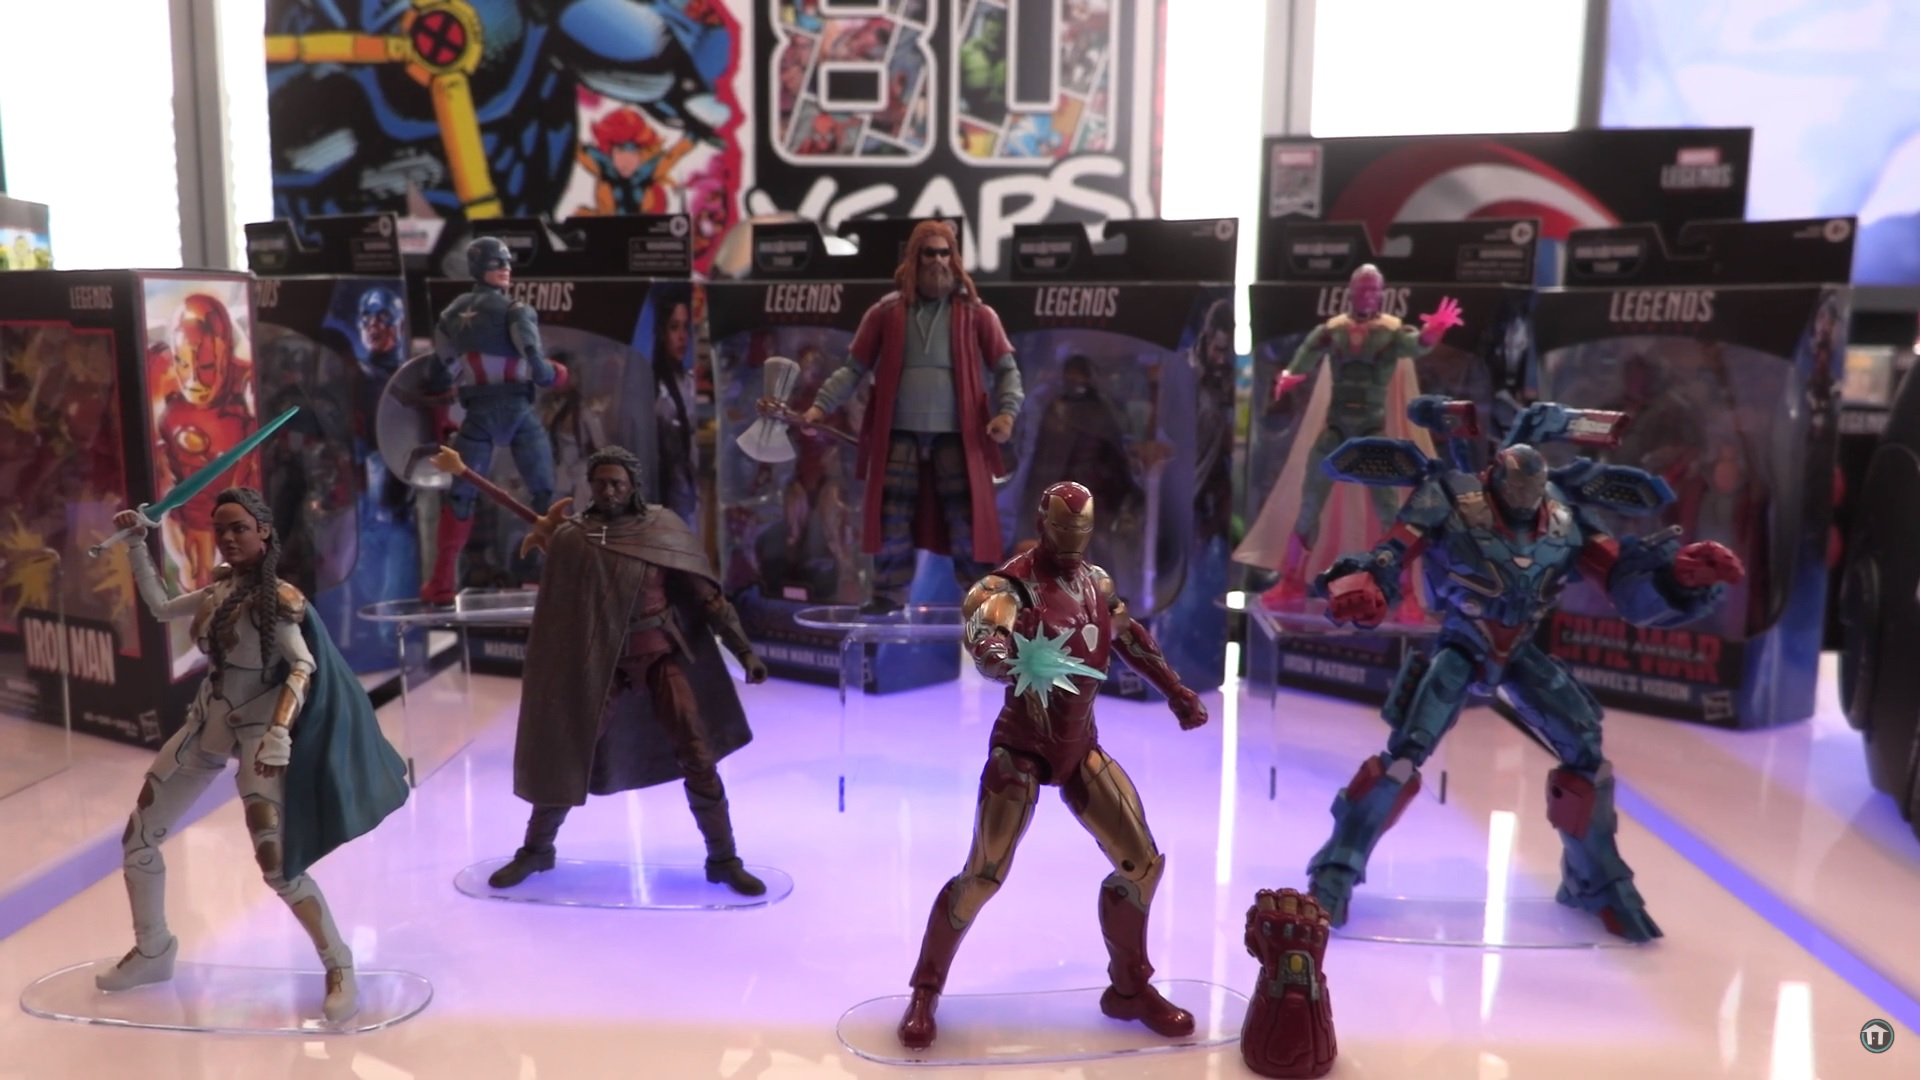 Tokoh Avengers Endgame menyoroti Hasbro Marvel Lineup legenda